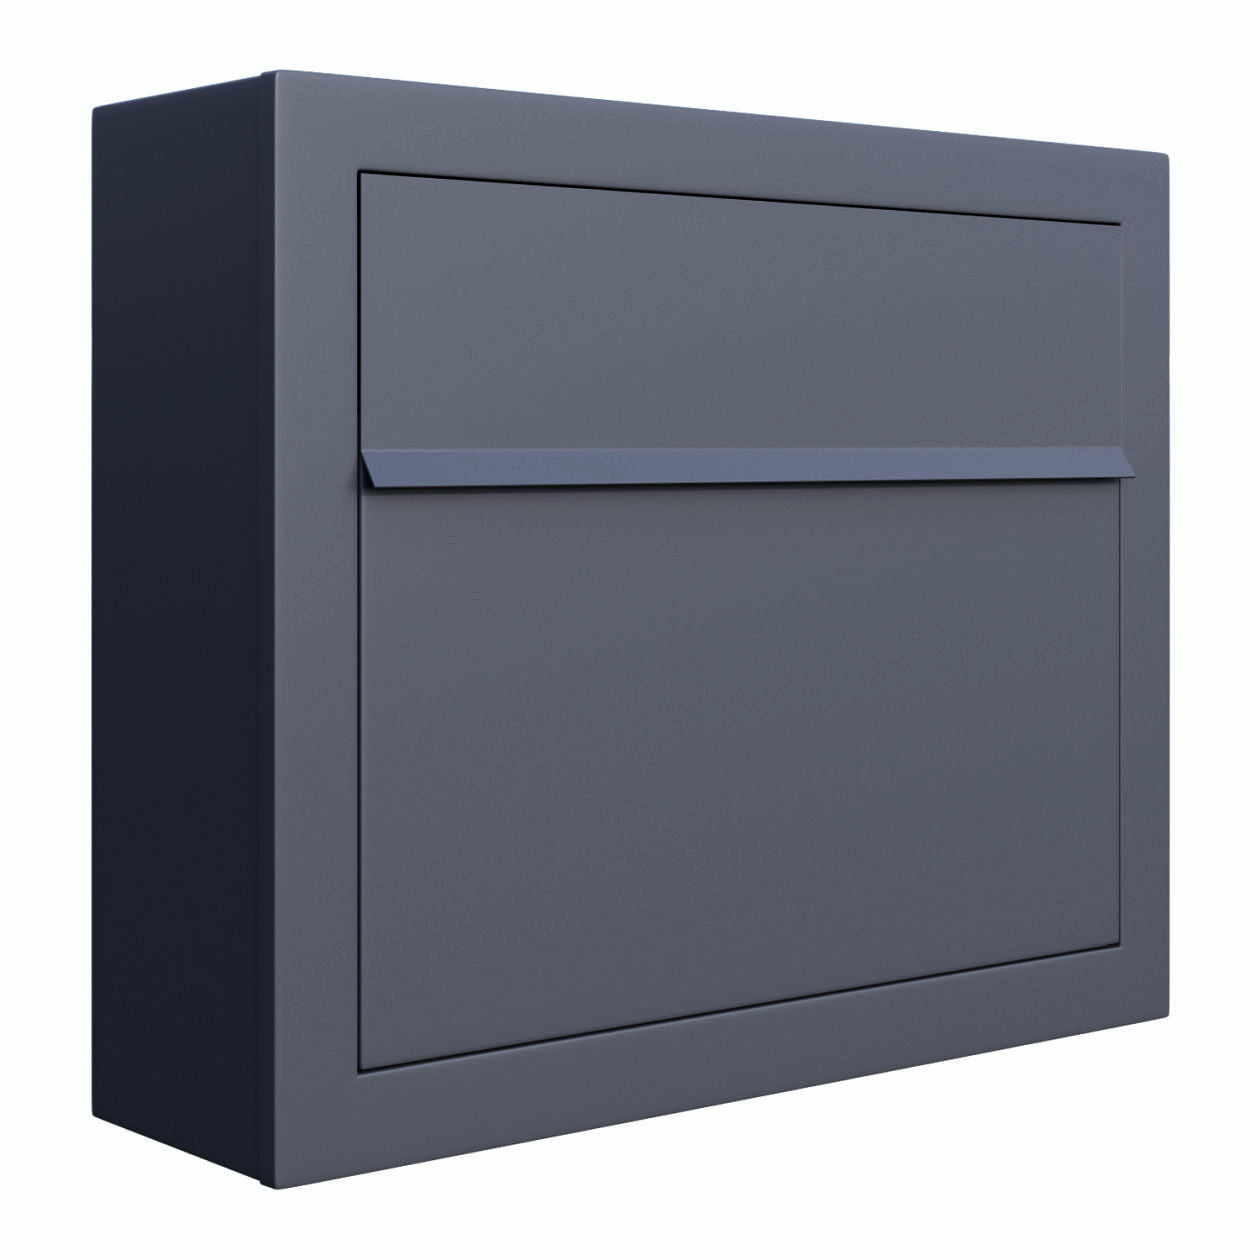 ELEGANCE by Bravios - Modern wall-mounted anthracite mailbox